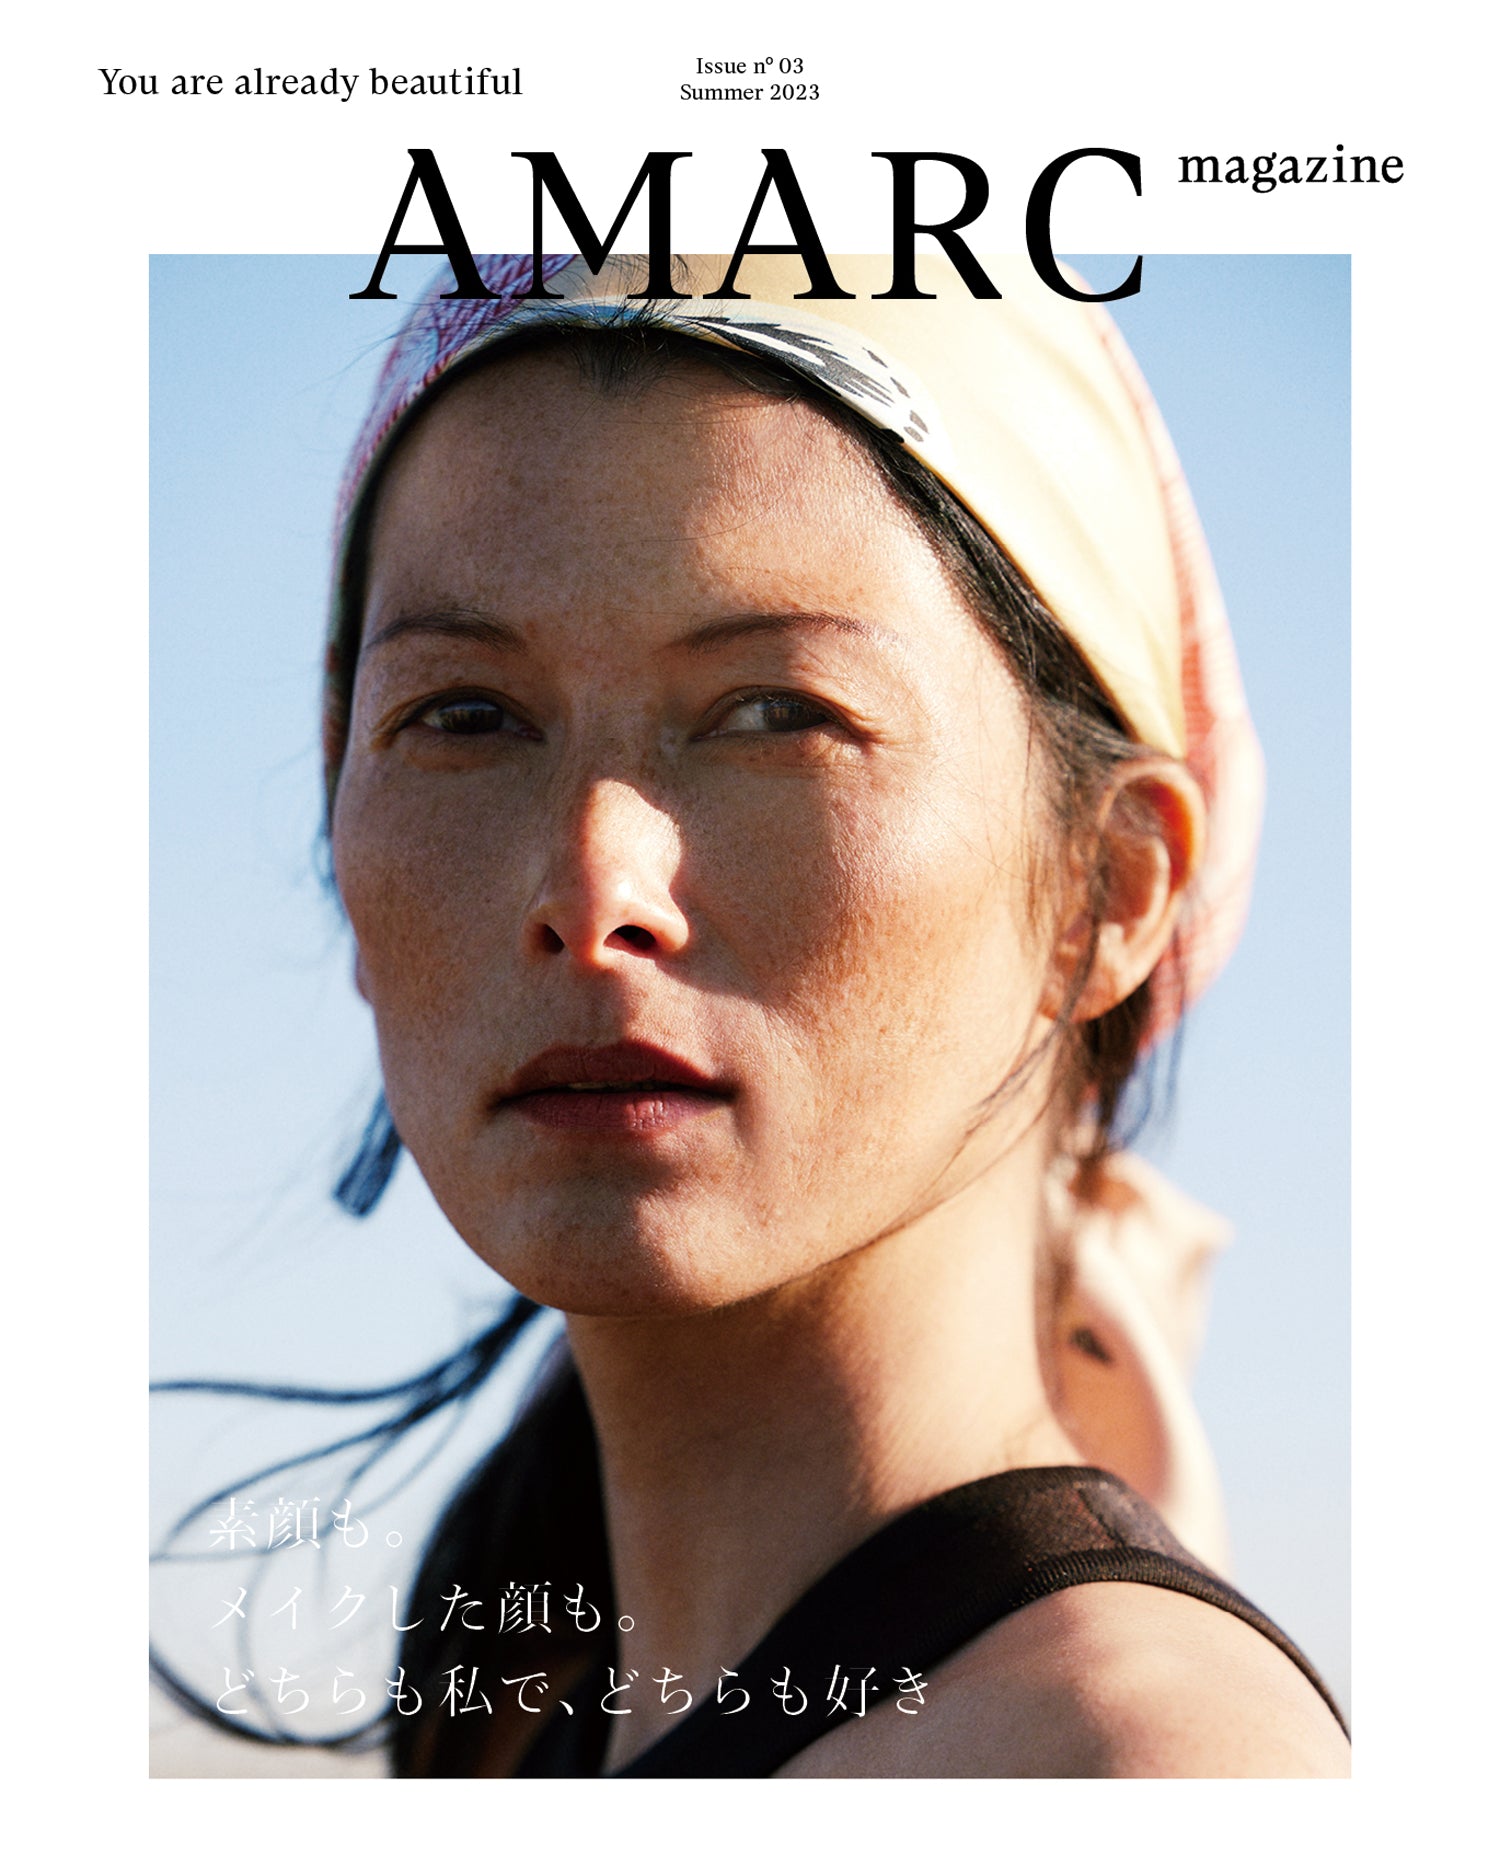 [Standard version cover] AMARC magazine issue 03